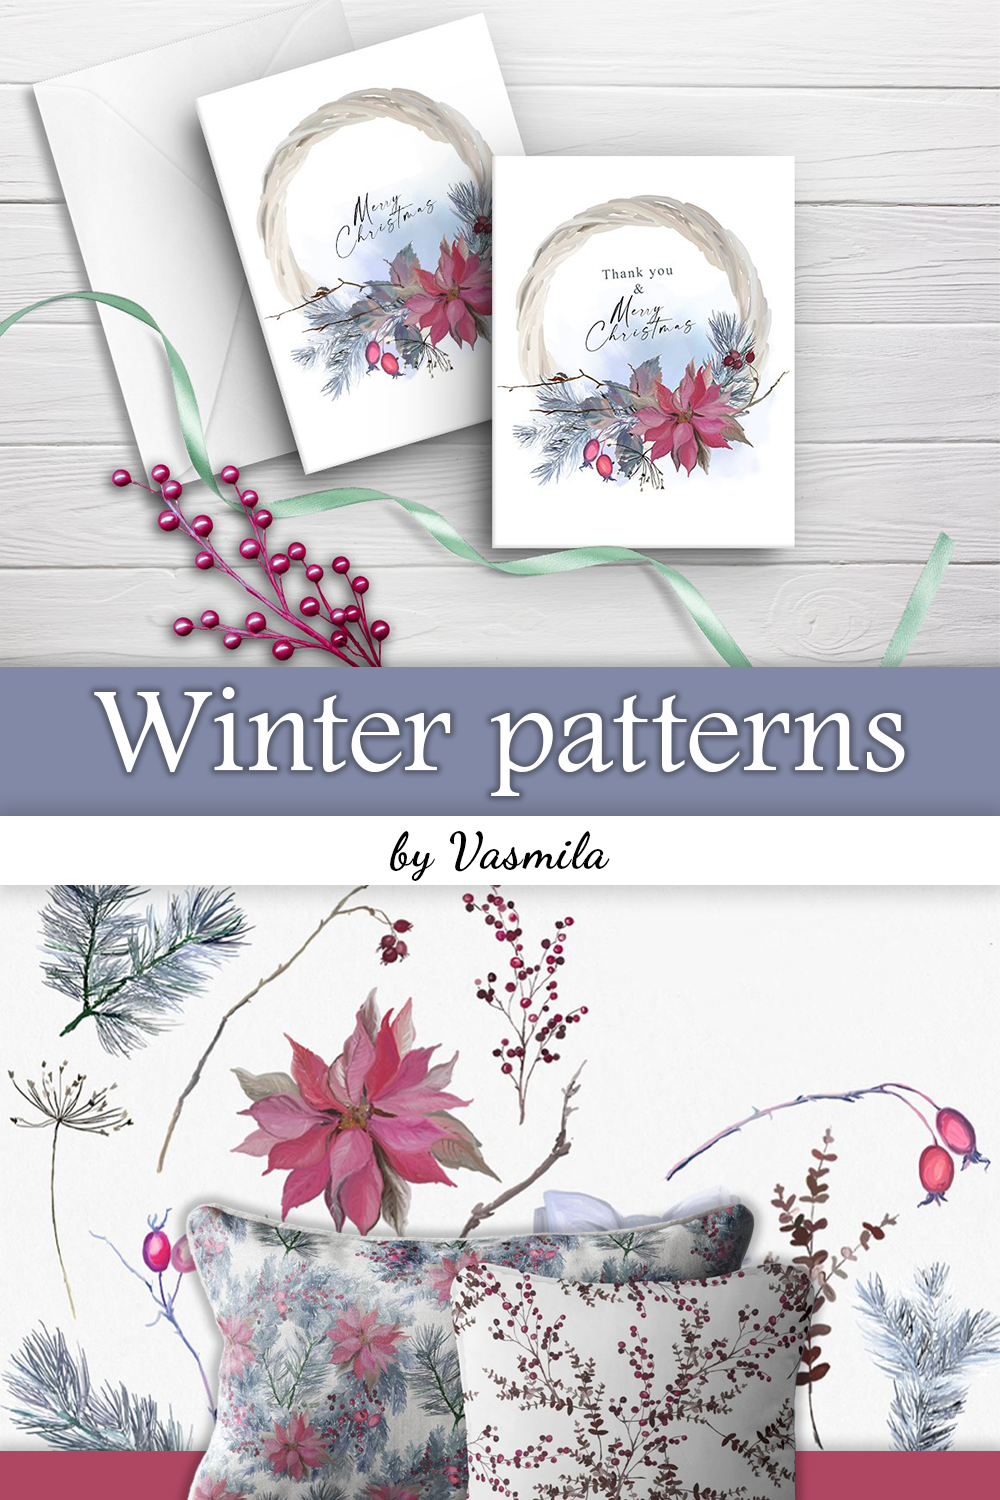 Winter patterns of pinterest.